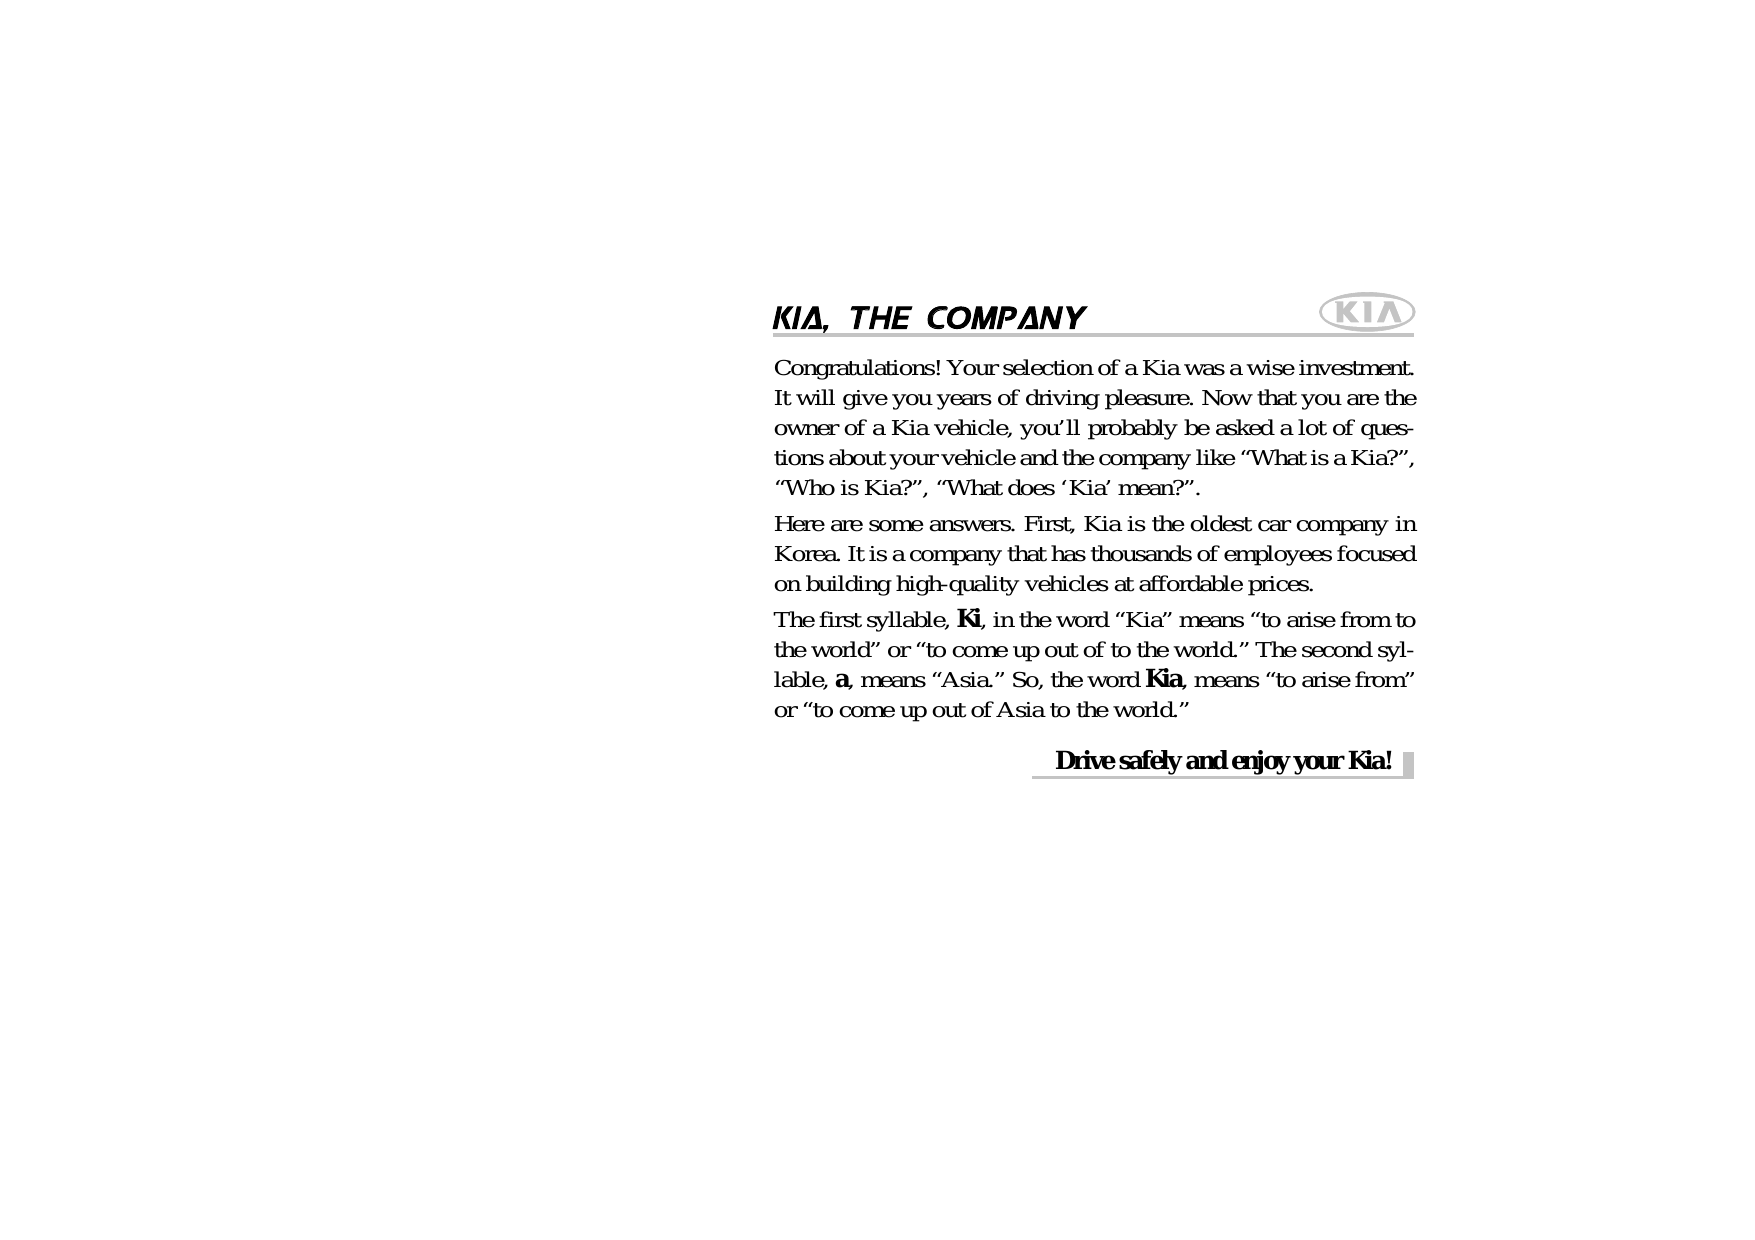 2006 KIA Amanti owners manual Preview image 1